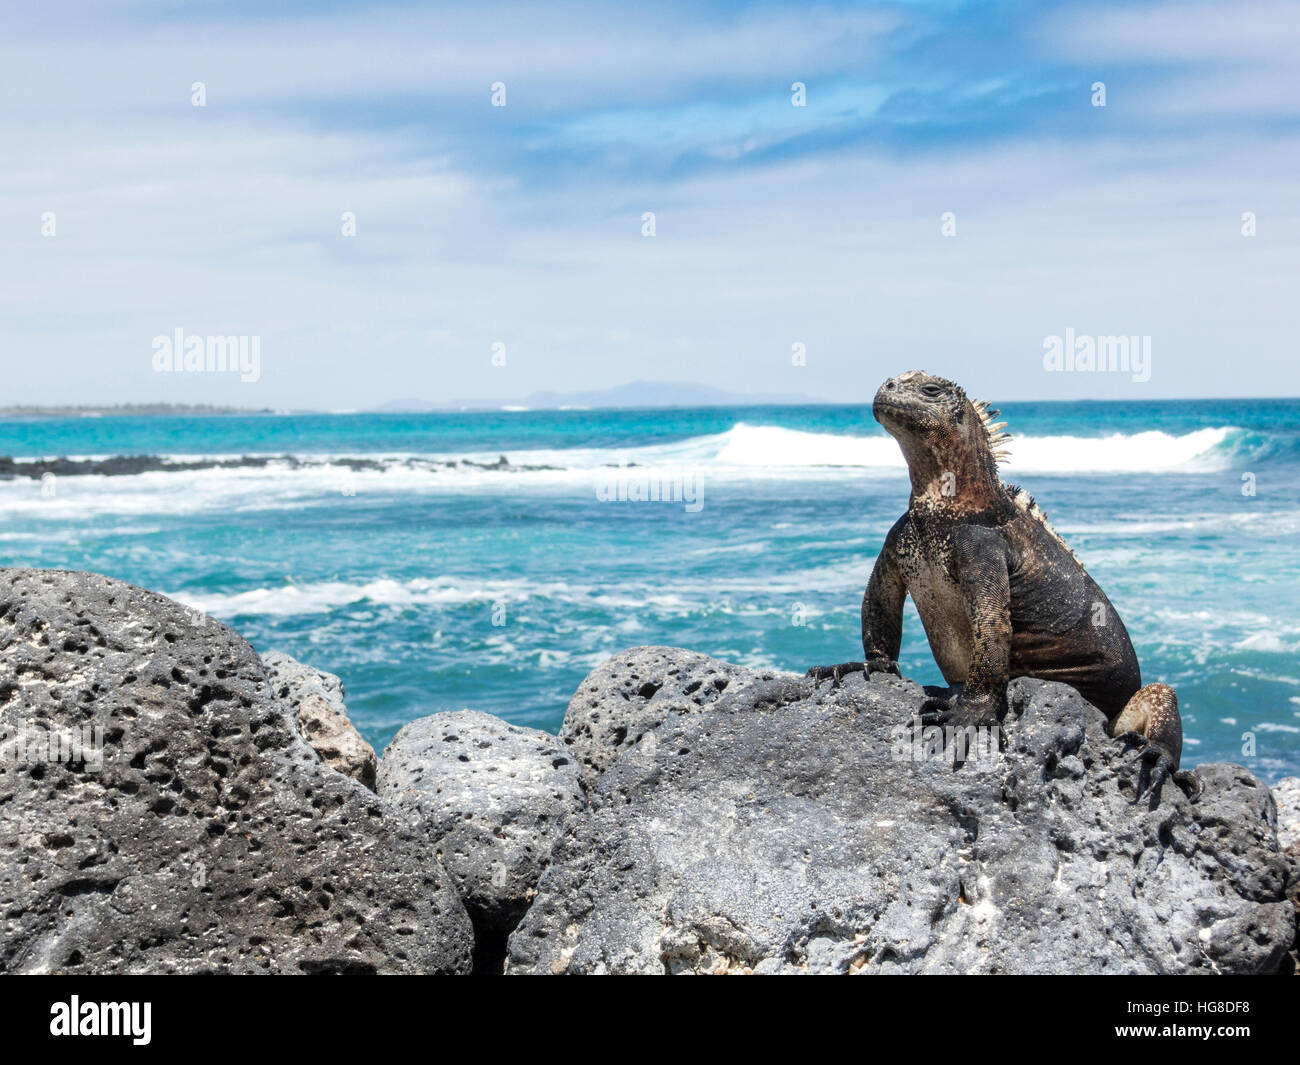 Marine iguana on rock at beach against sky Stock Photo